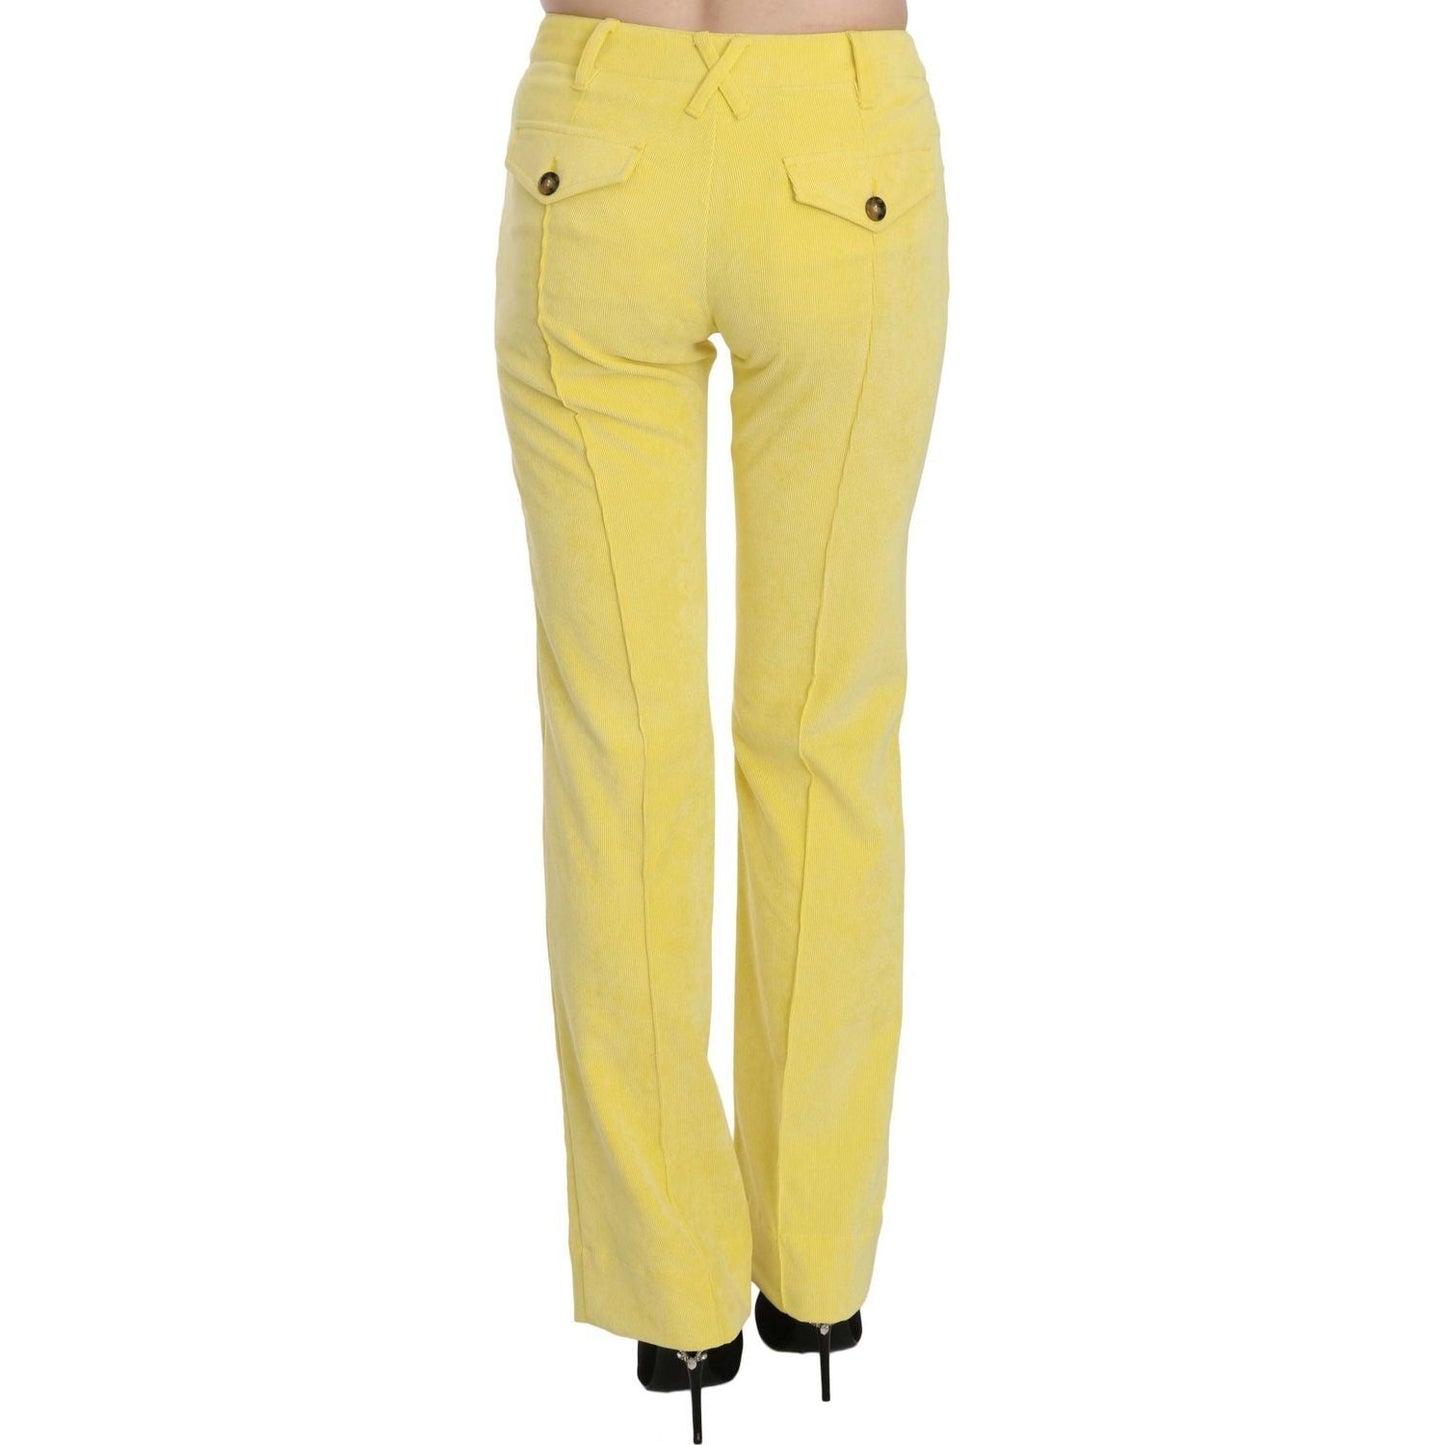 Just Cavalli Chic Yellow Corduroy Mid Waist Pants yellow-corduroy-mid-waist-straight-trousers-pants IMG_5596-scaled-7e9b6bc5-278.jpg